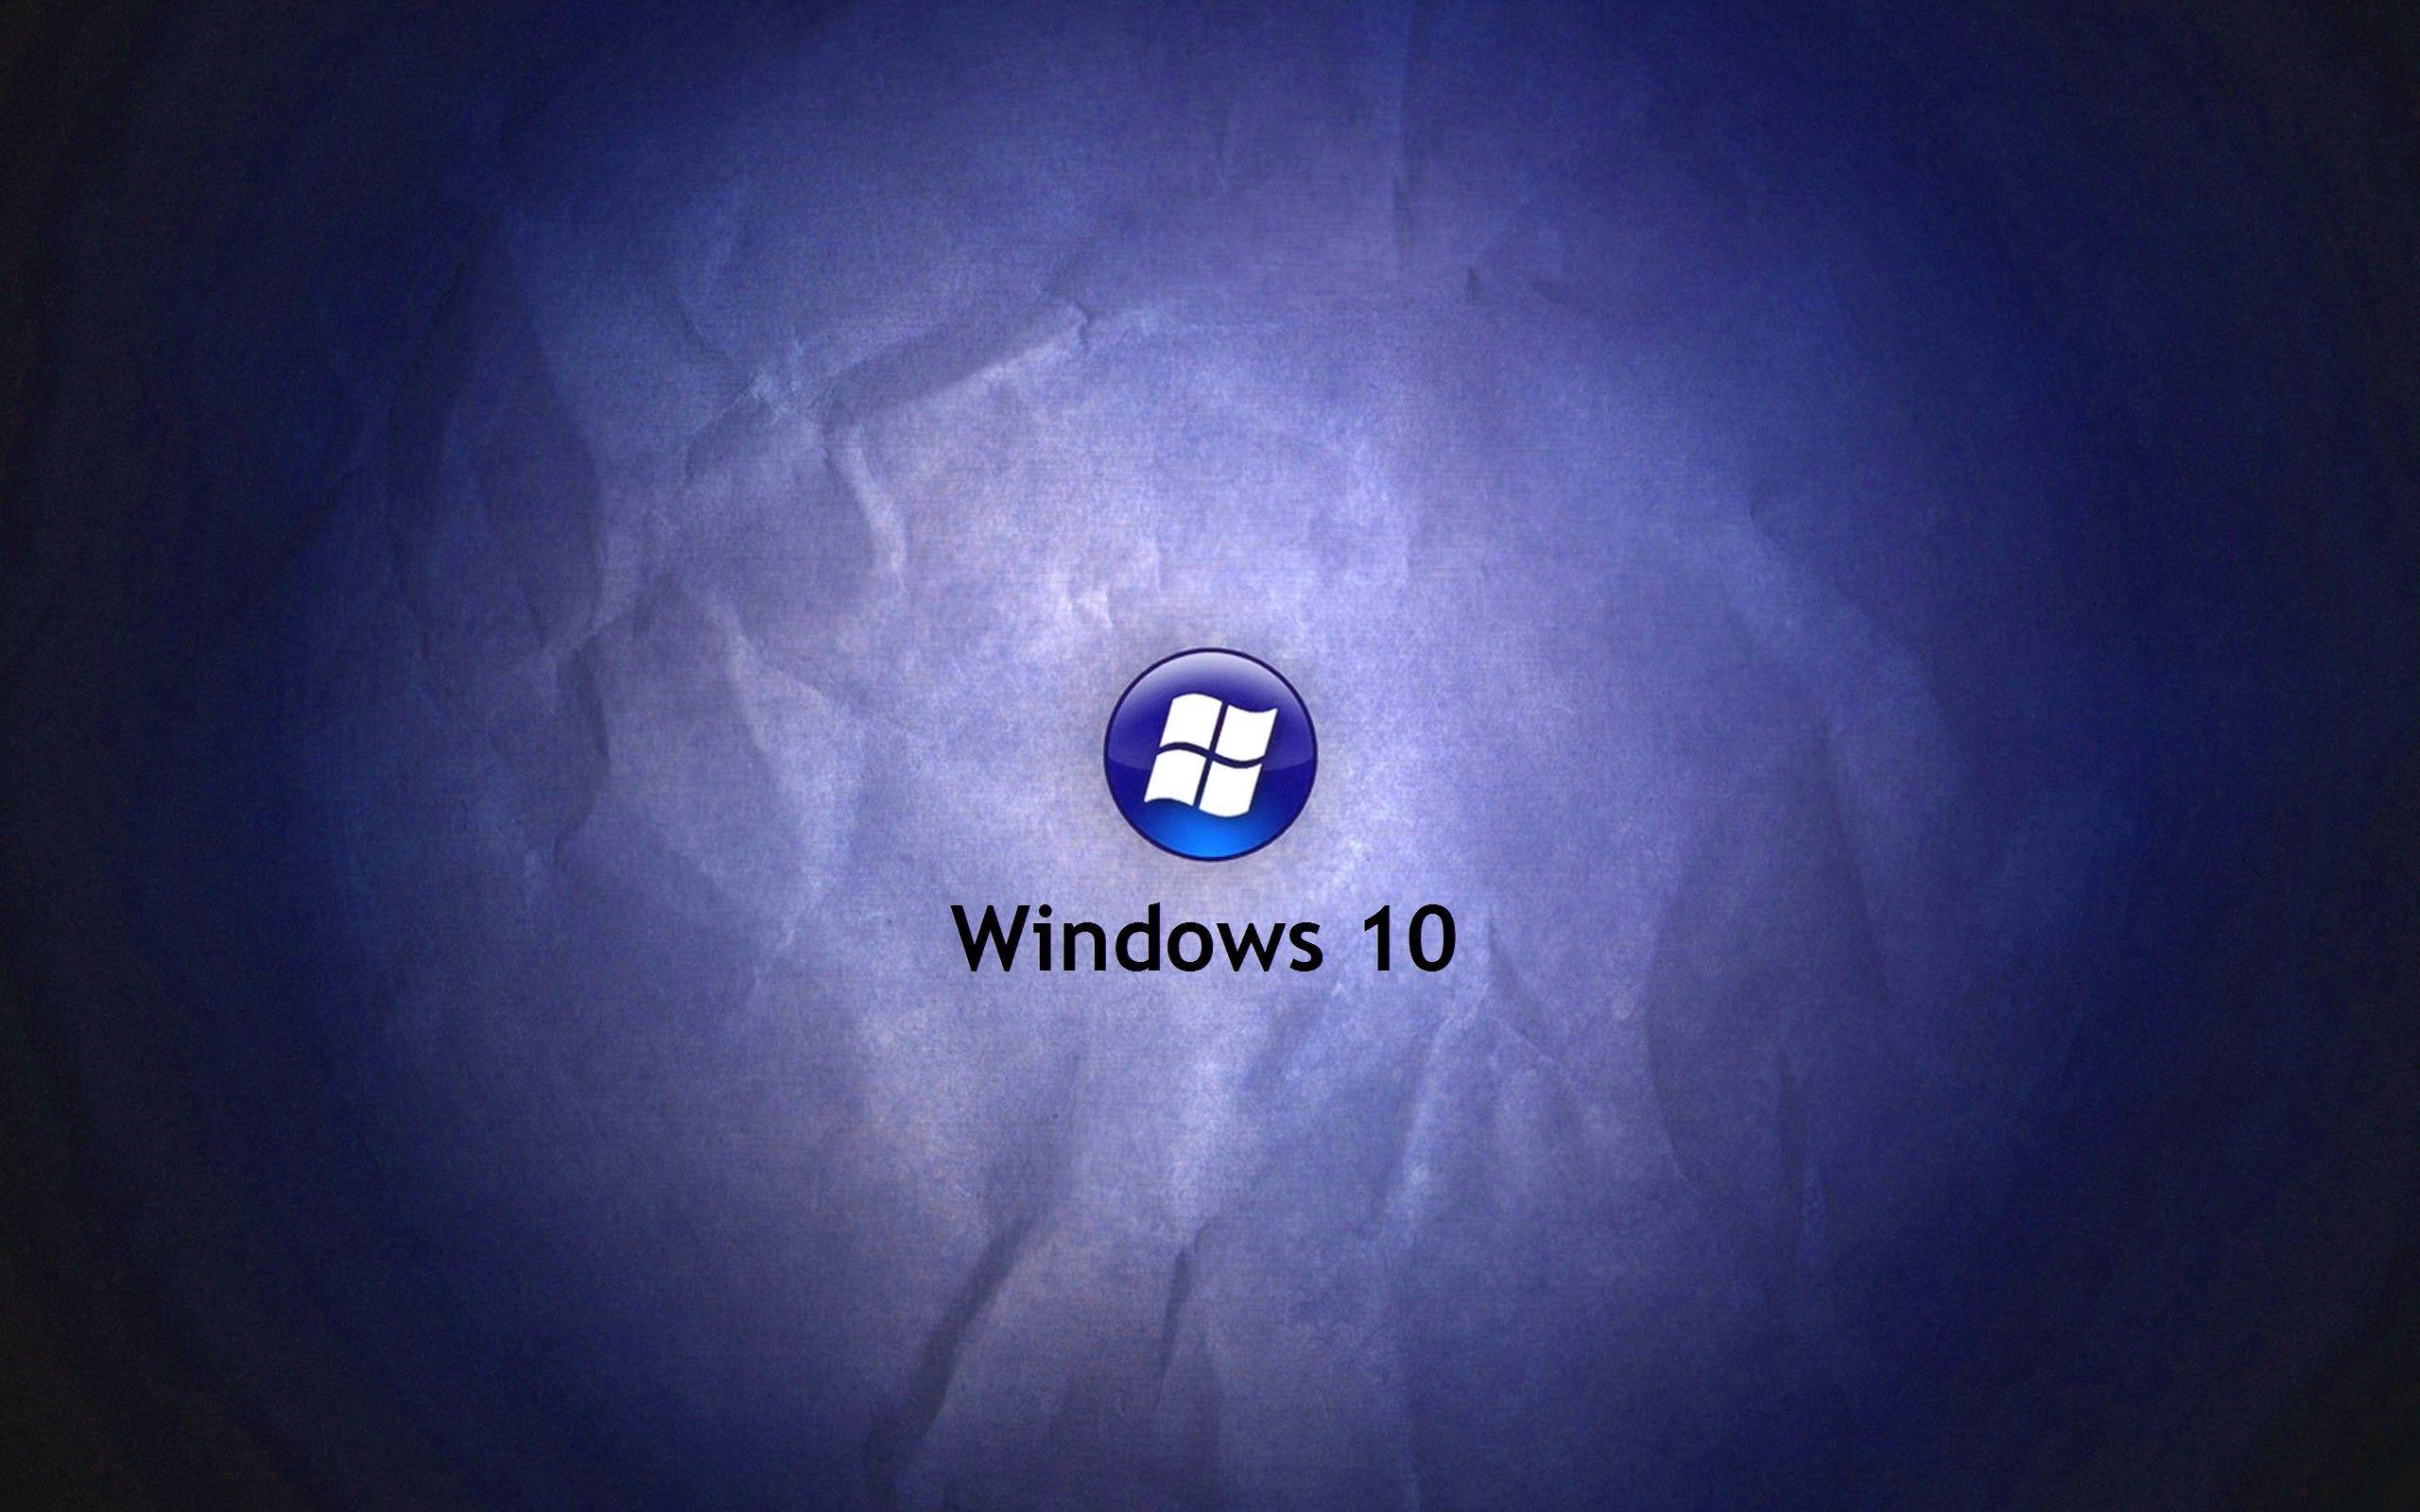 Windows 10 Hd Wallpapers Top Free Windows 10 Hd Backgrounds Wallpaperaccess